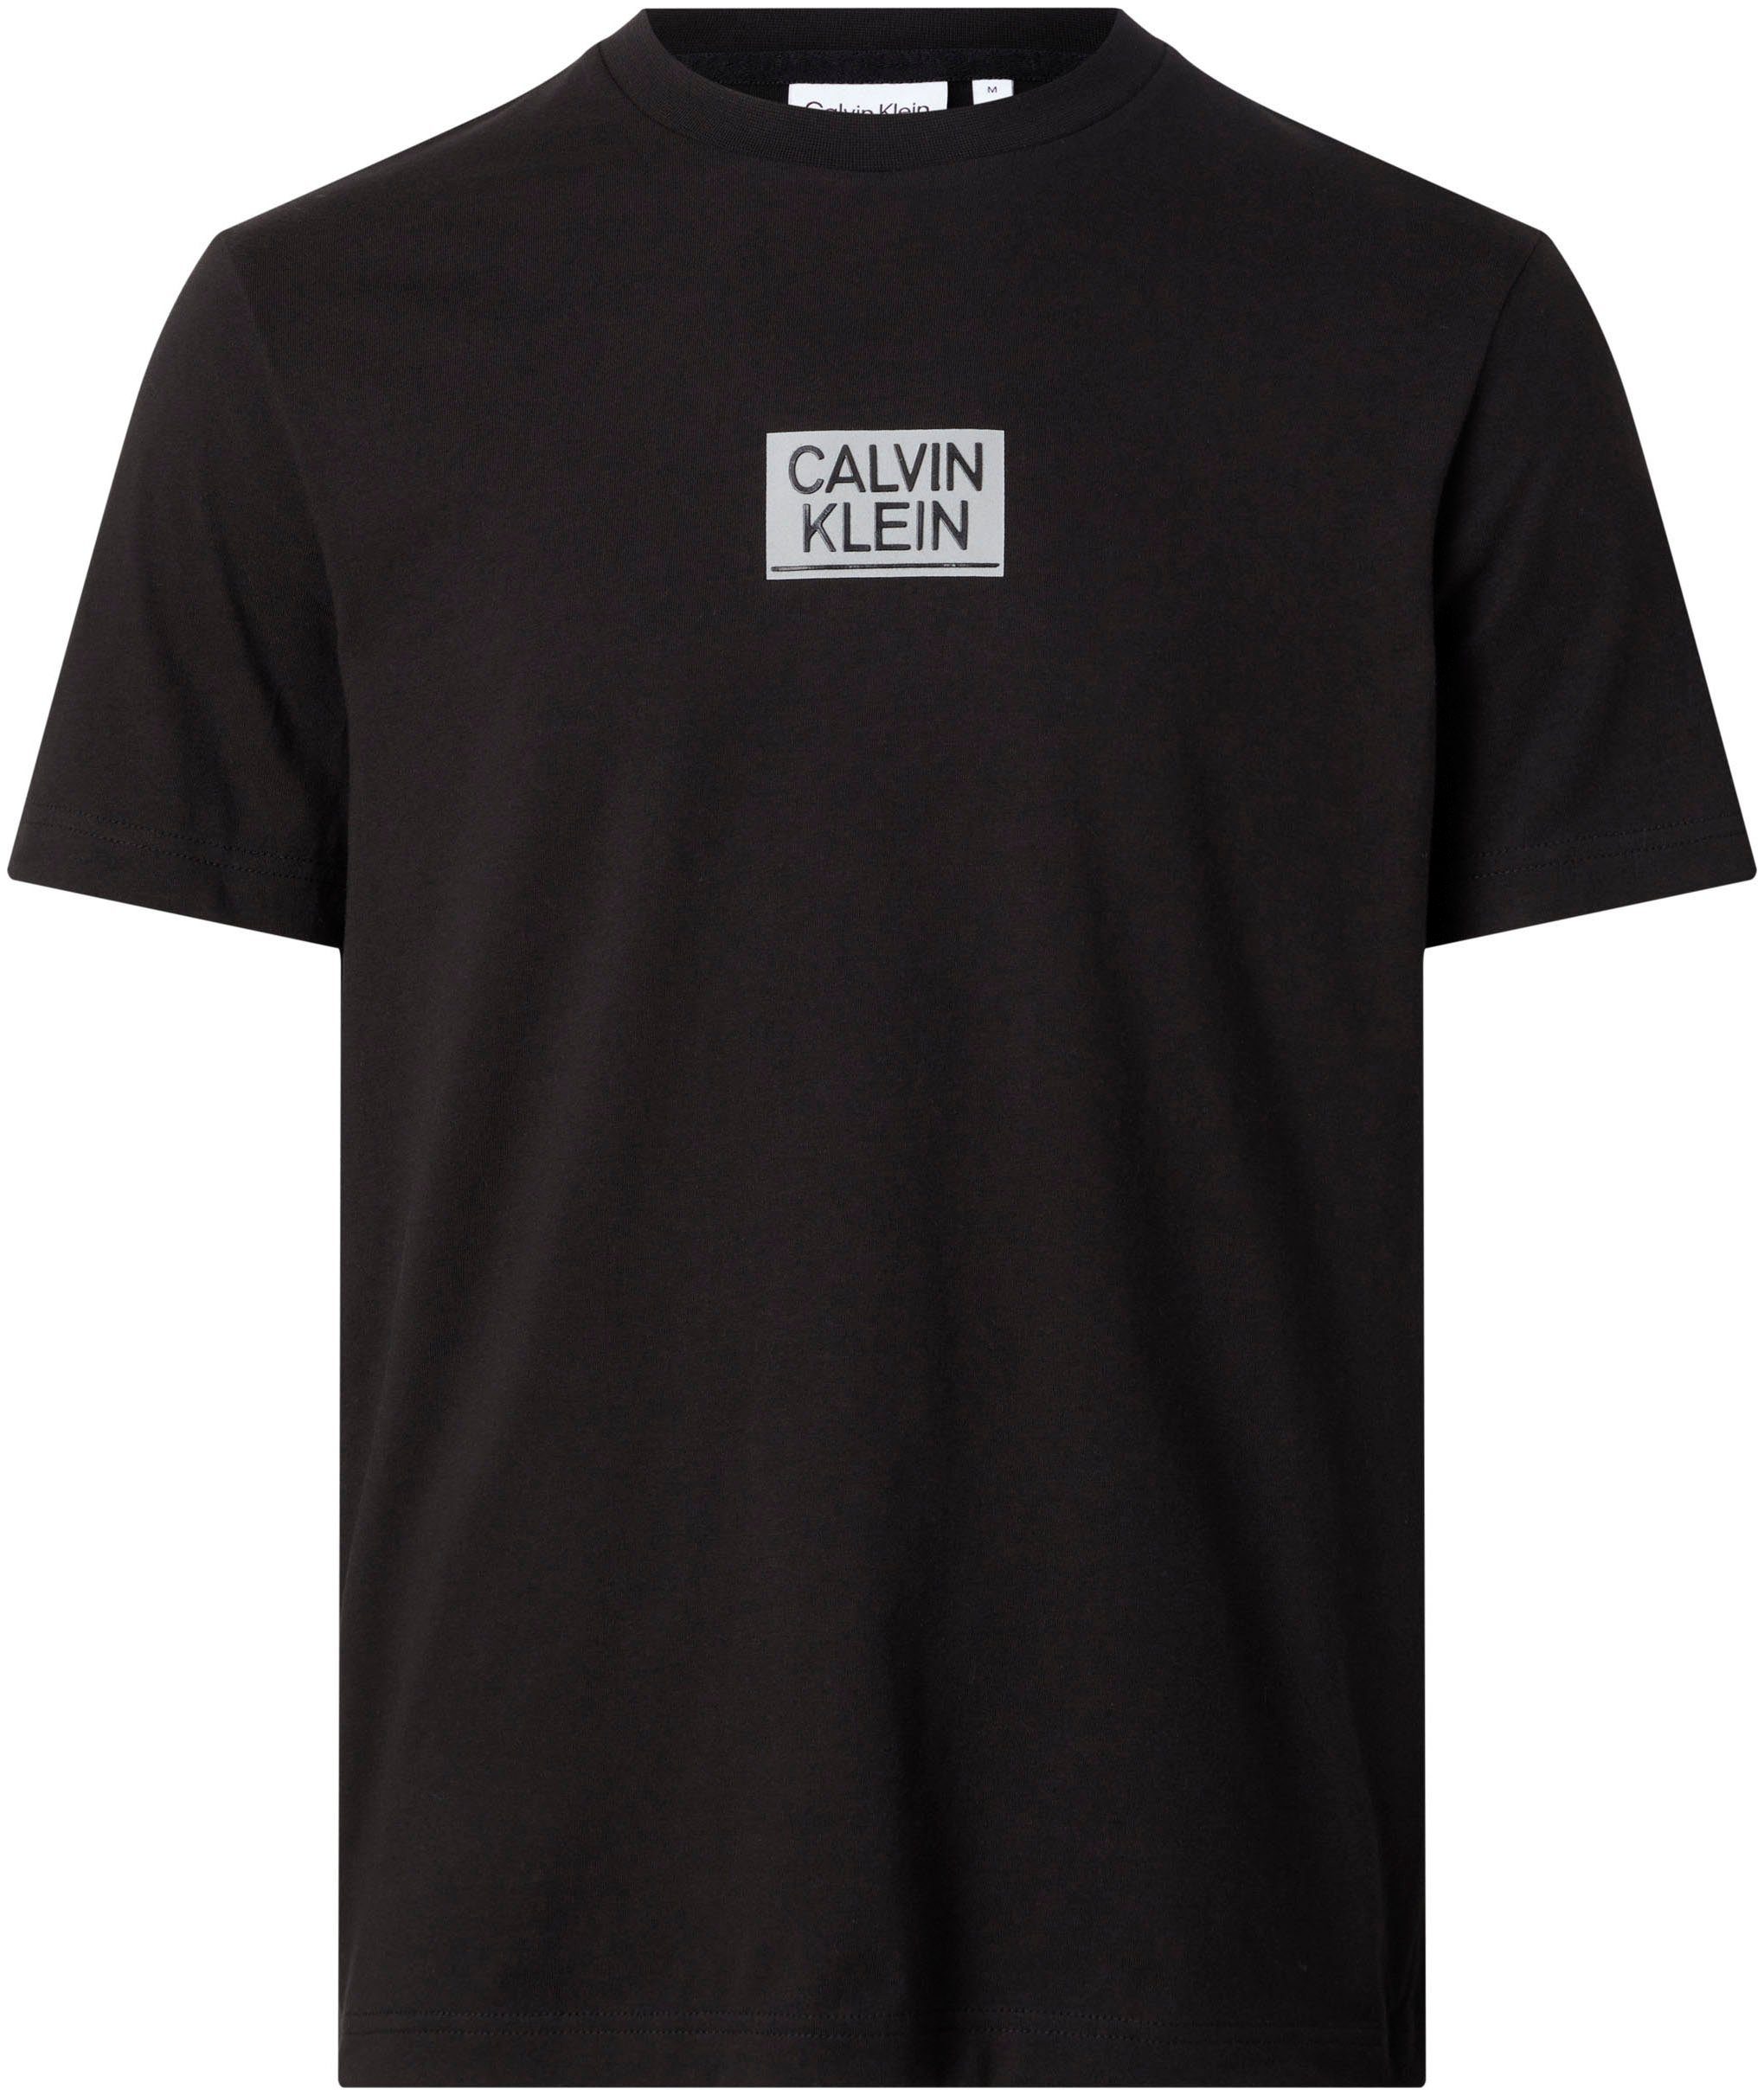 Ck T-SHIRT Klein Black T-Shirt STENCIL GLOSS Calvin LOGO